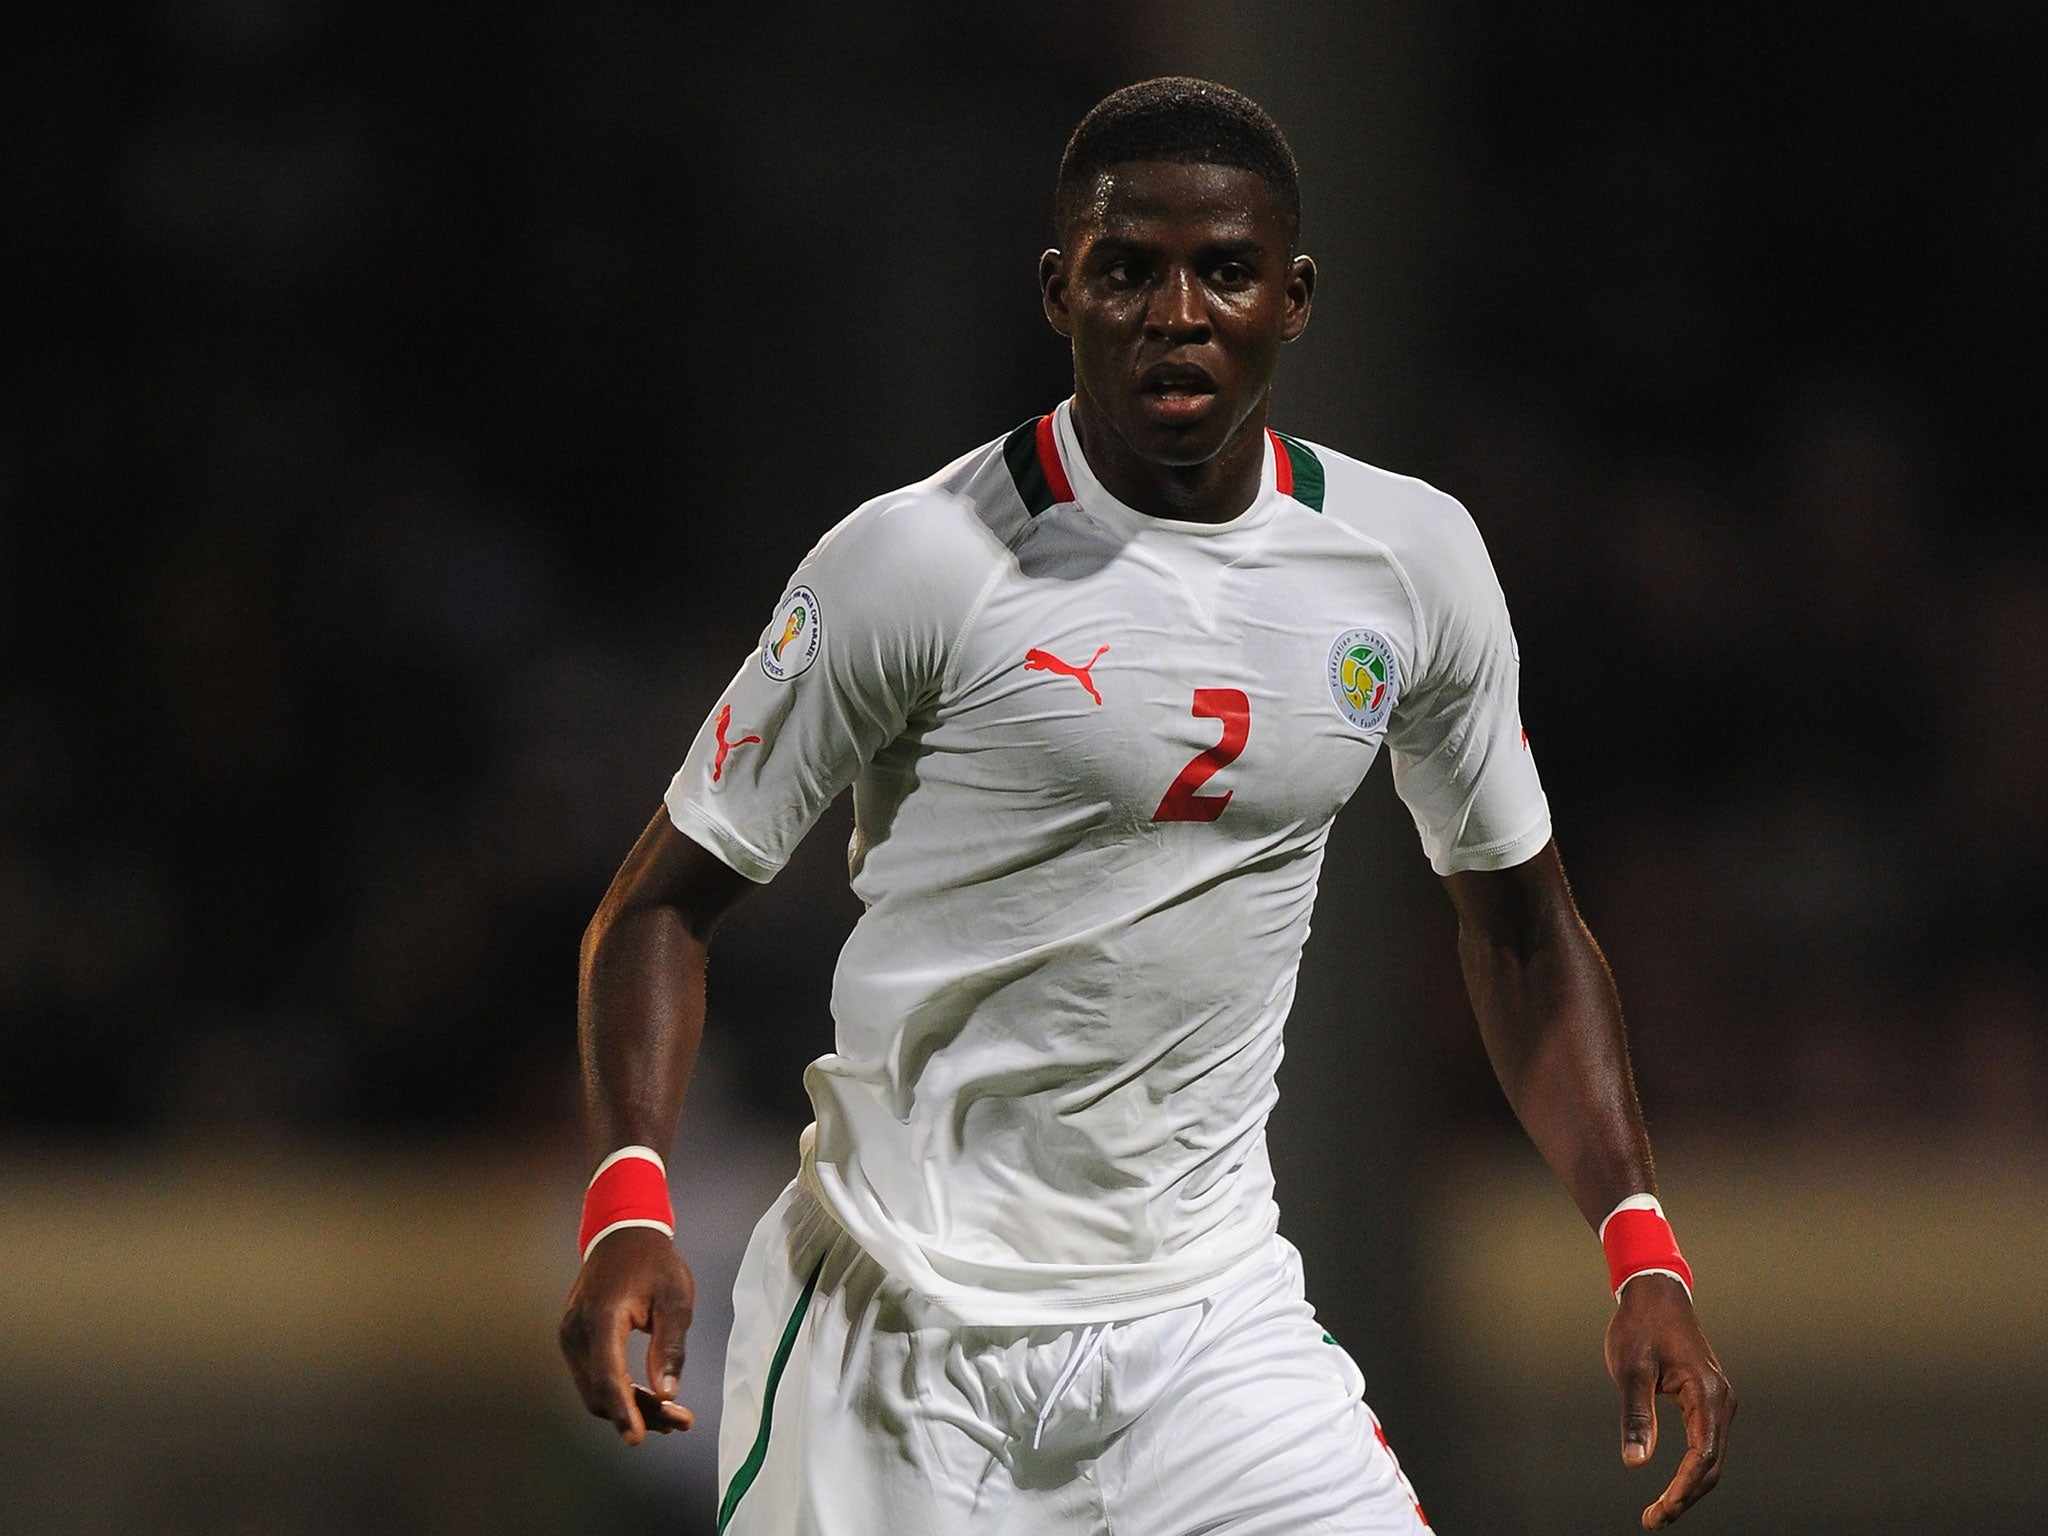 The Senegal centre-half Papy Djilobodji has signed for £2.7m